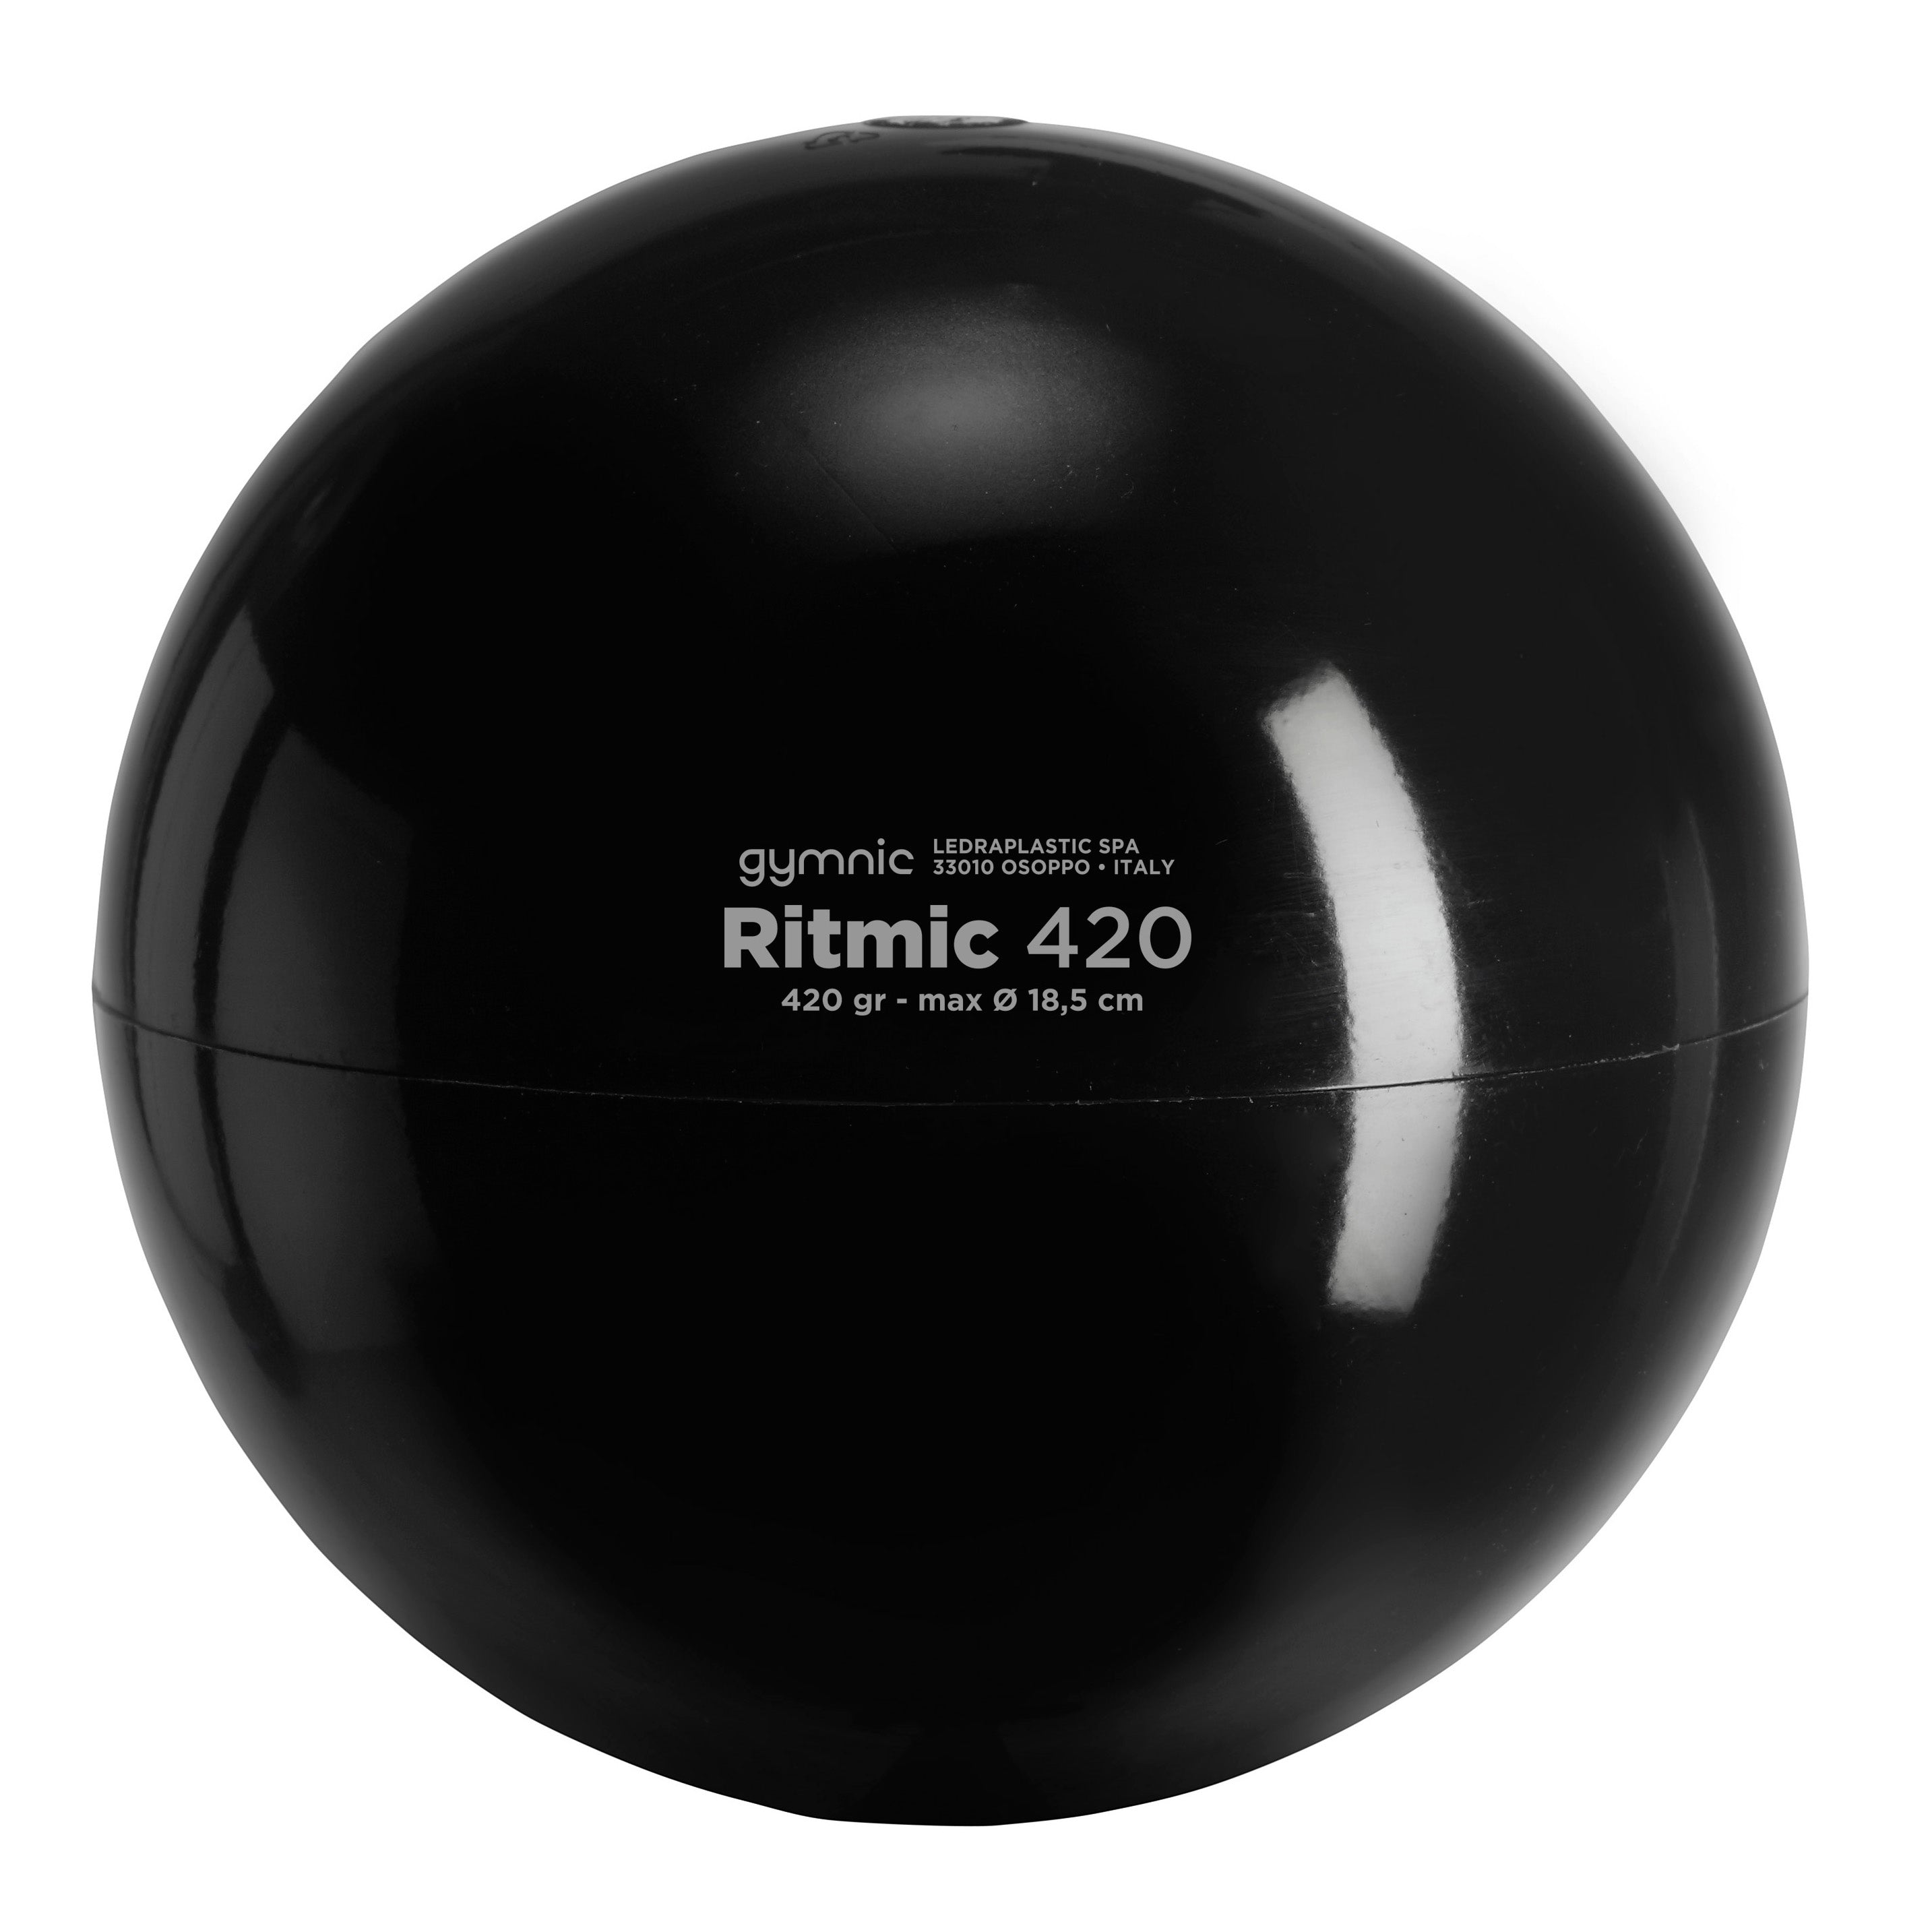 Gymnic Ritmic Balls  (420 Grams)